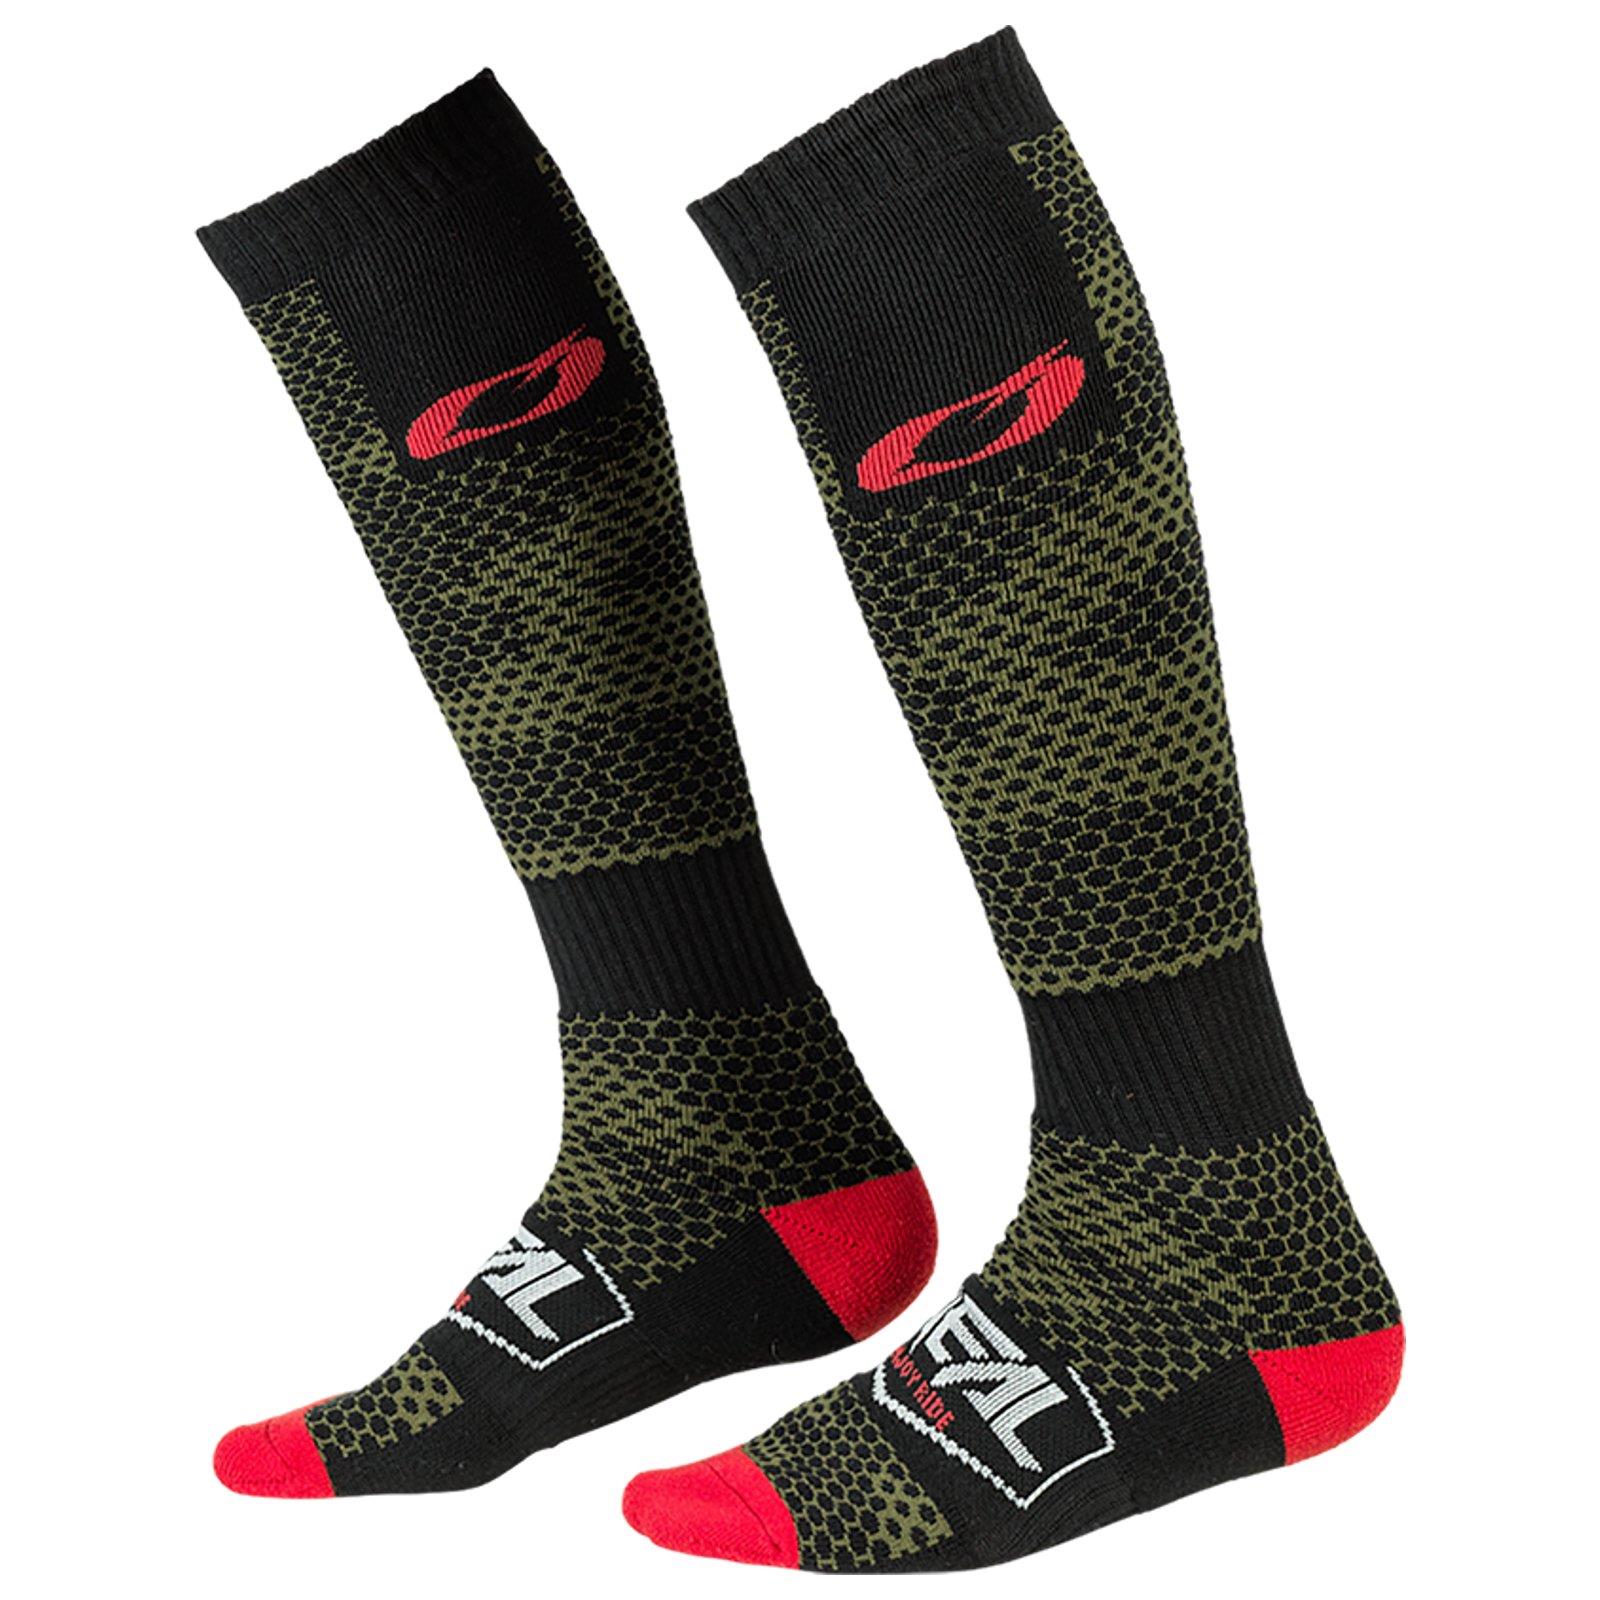 O'Neal Socken für Knie Protektoren mehr KOMFORT Sock Sleeve MX DH Moto Cross MTB 